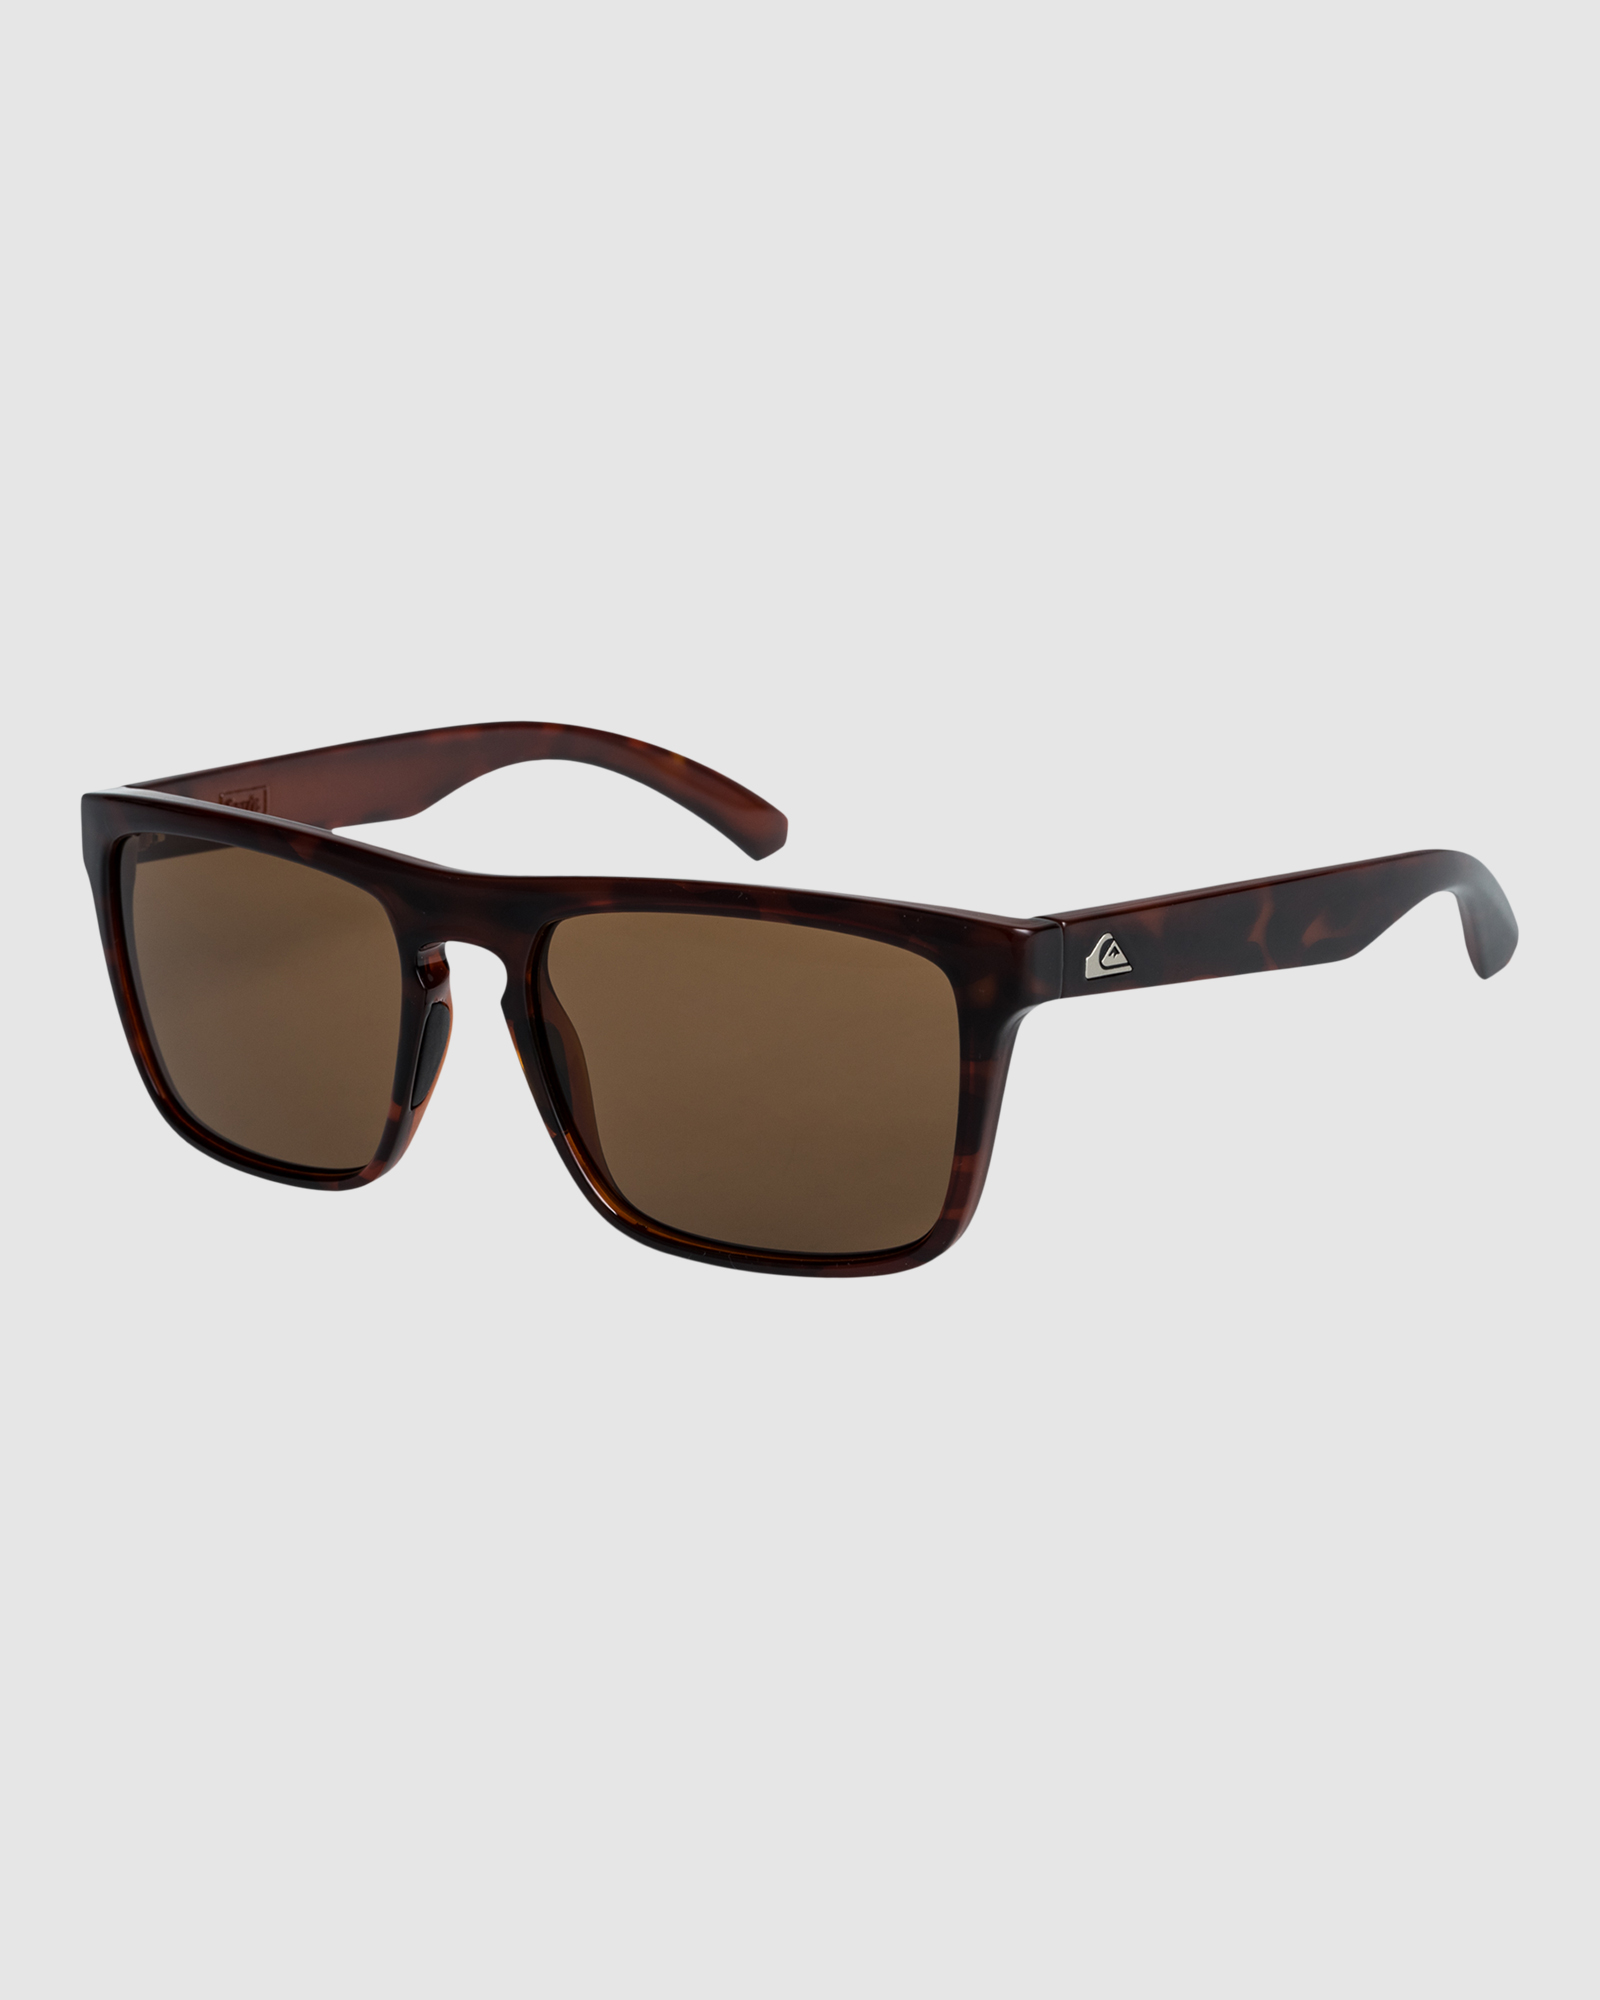 Quiksilver Ferris - Sunglasses For Men - Brown Tortoise Brown